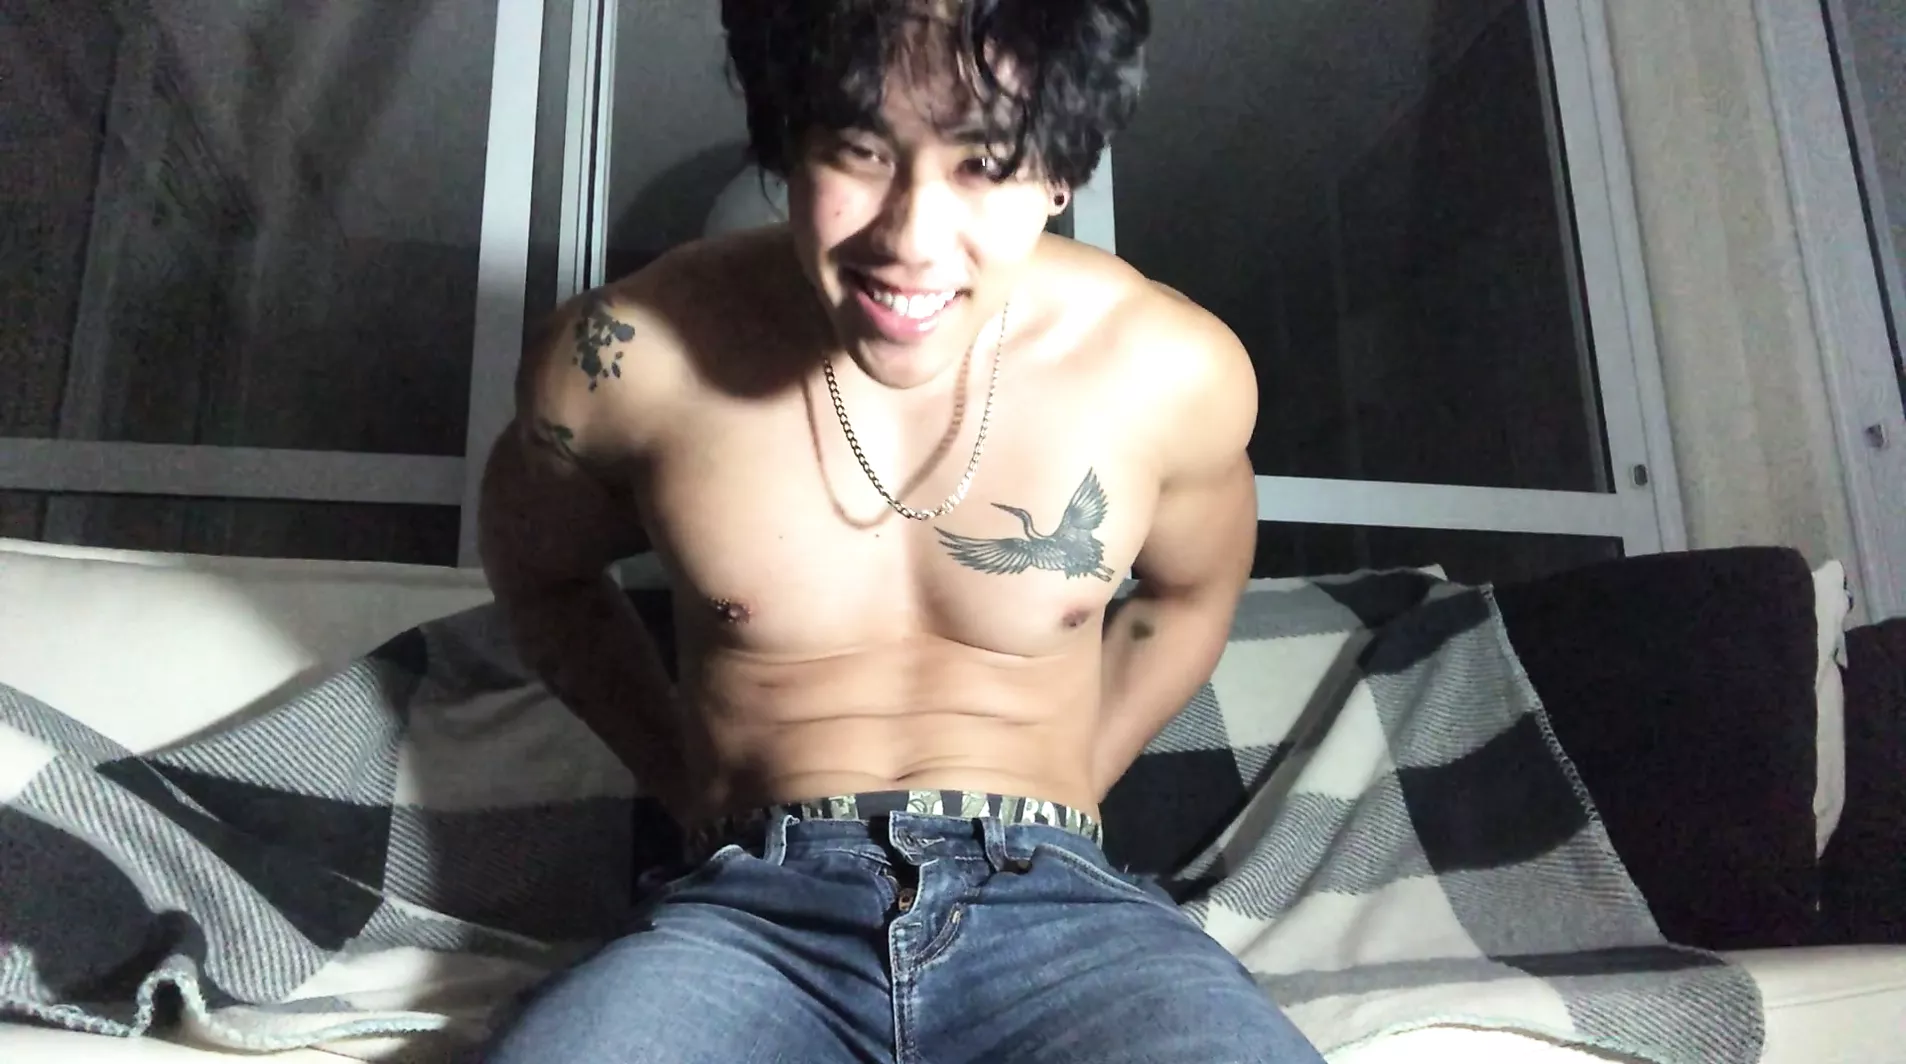 Asian Jerking Black - Asian boy massaging muscles and jerking off watch online